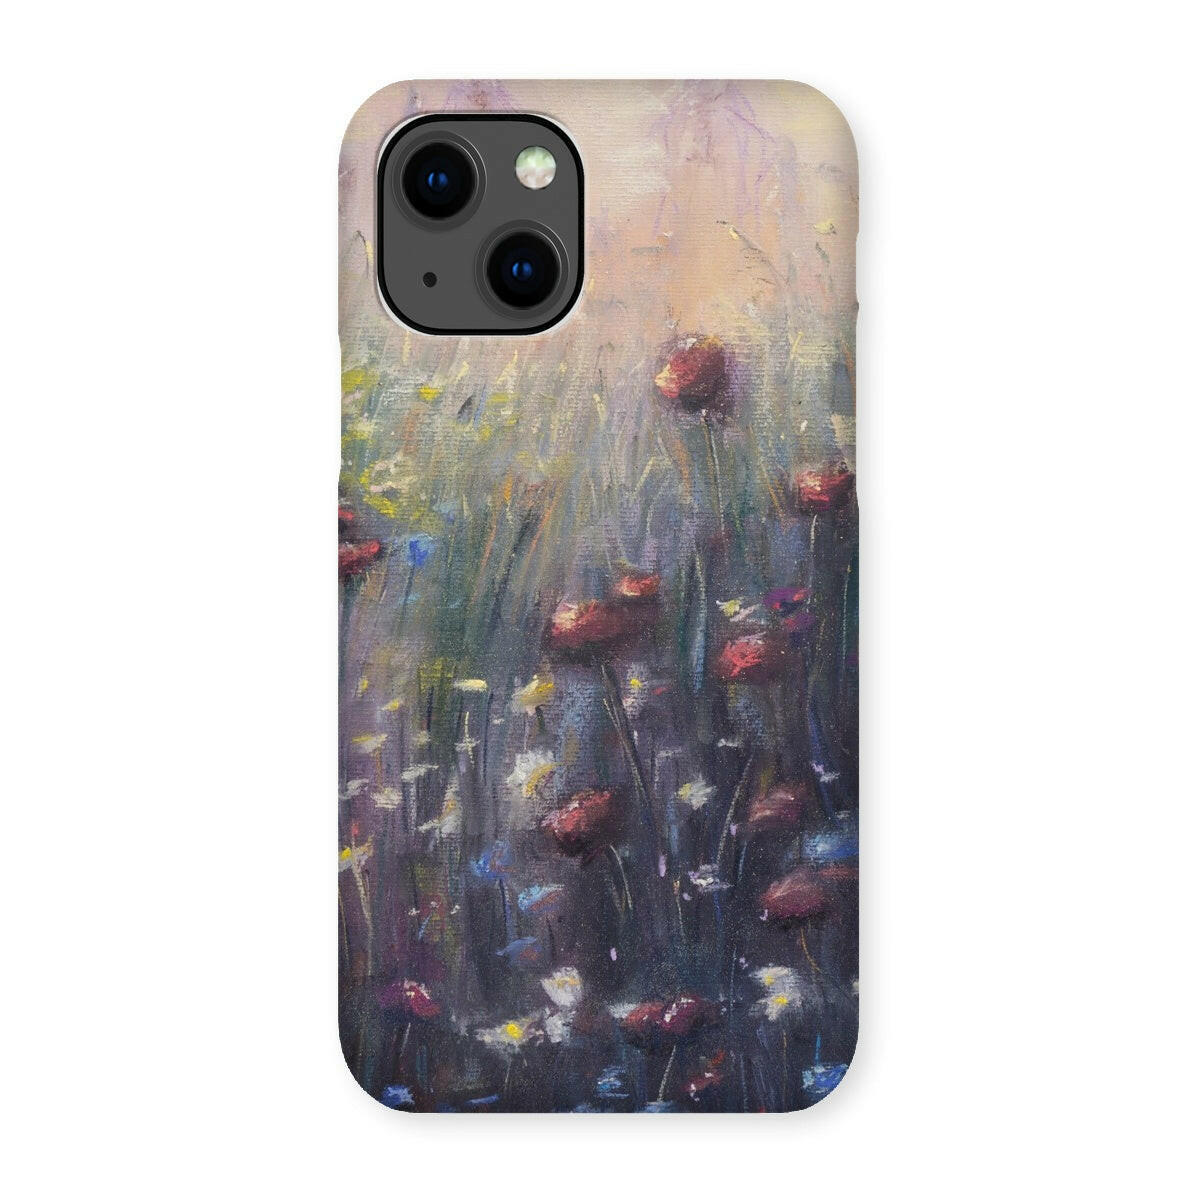 Stunning art Snap Phone Case.